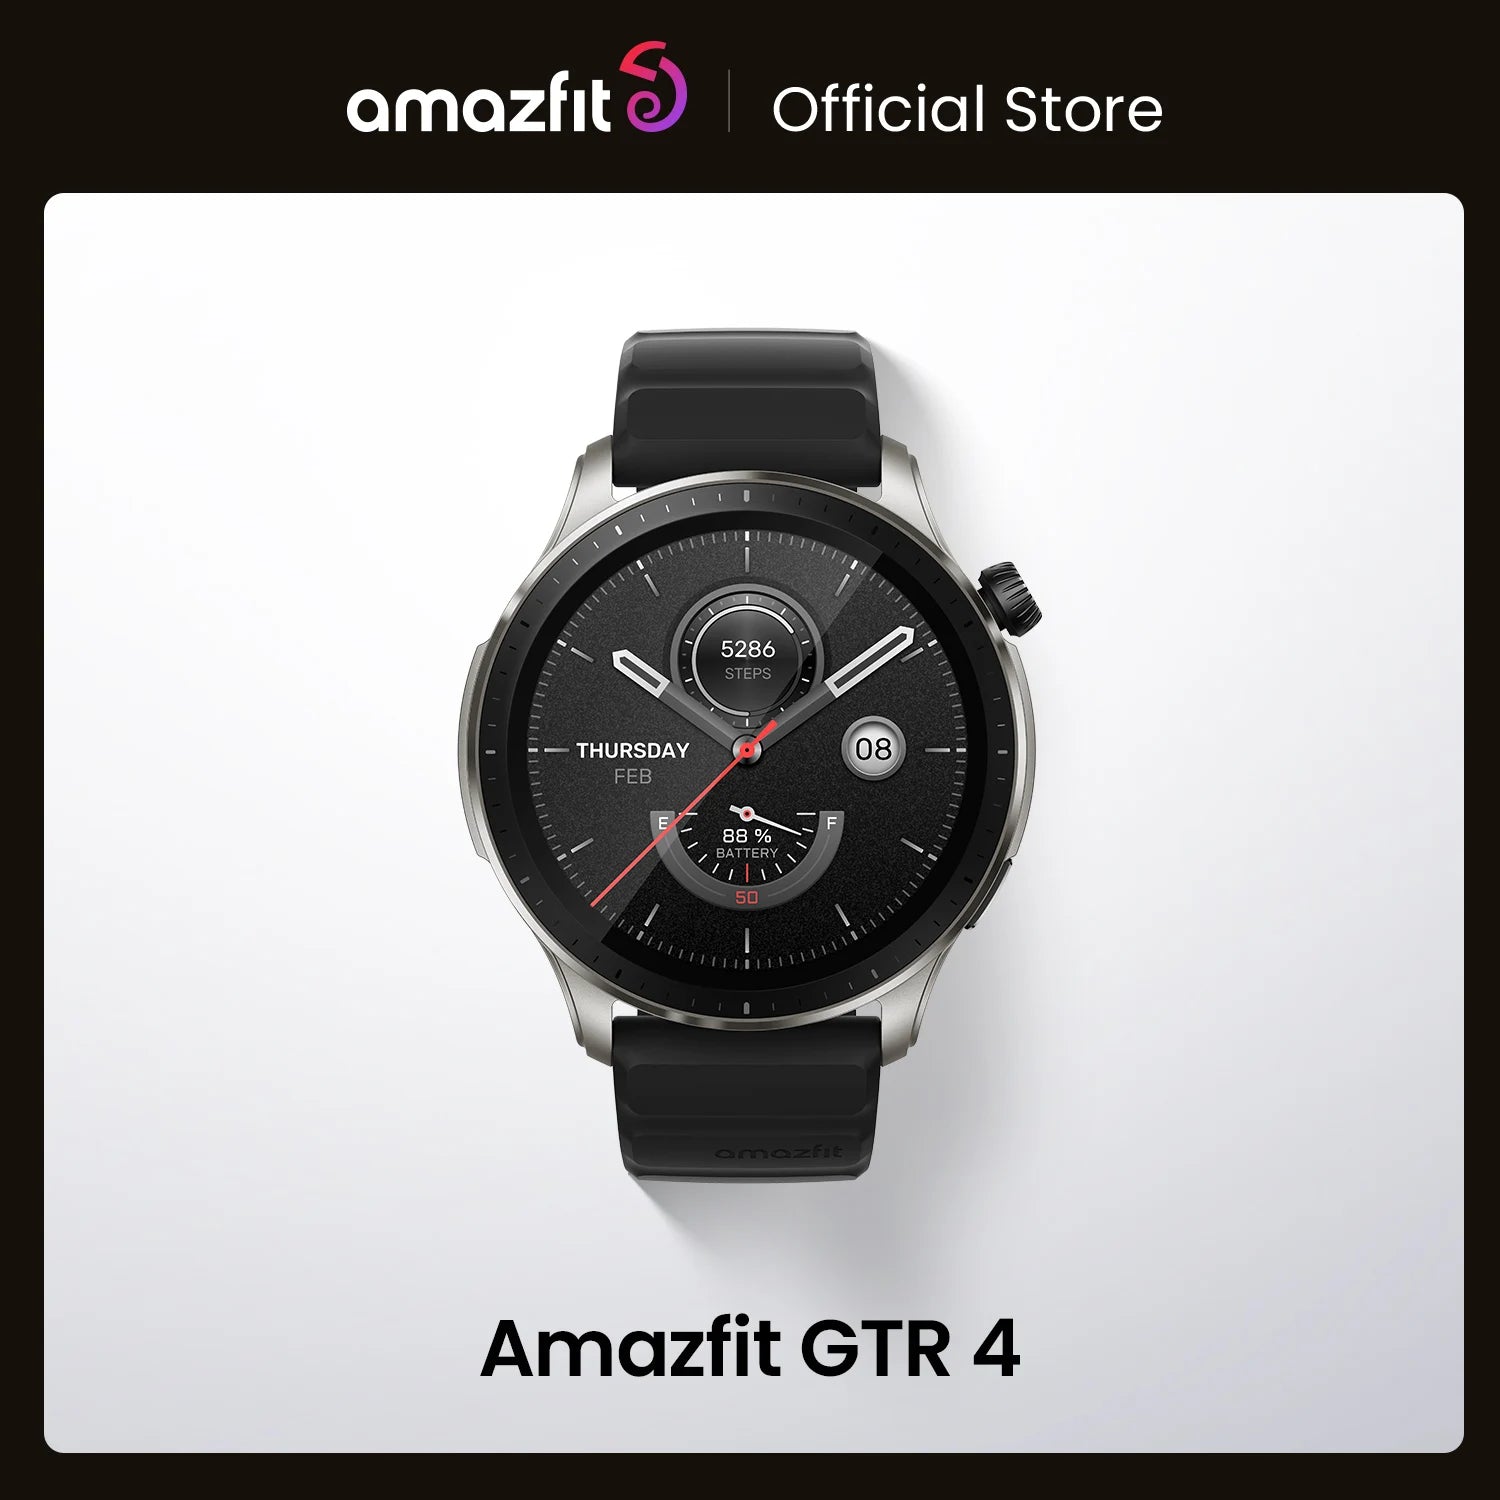 NEW Amazfit GTR 4 Smartwatch Alexa Built 150 Sports Modes Bluetooth Phone Calls Smart Watch 14Days Battery Life - Madeinsea©